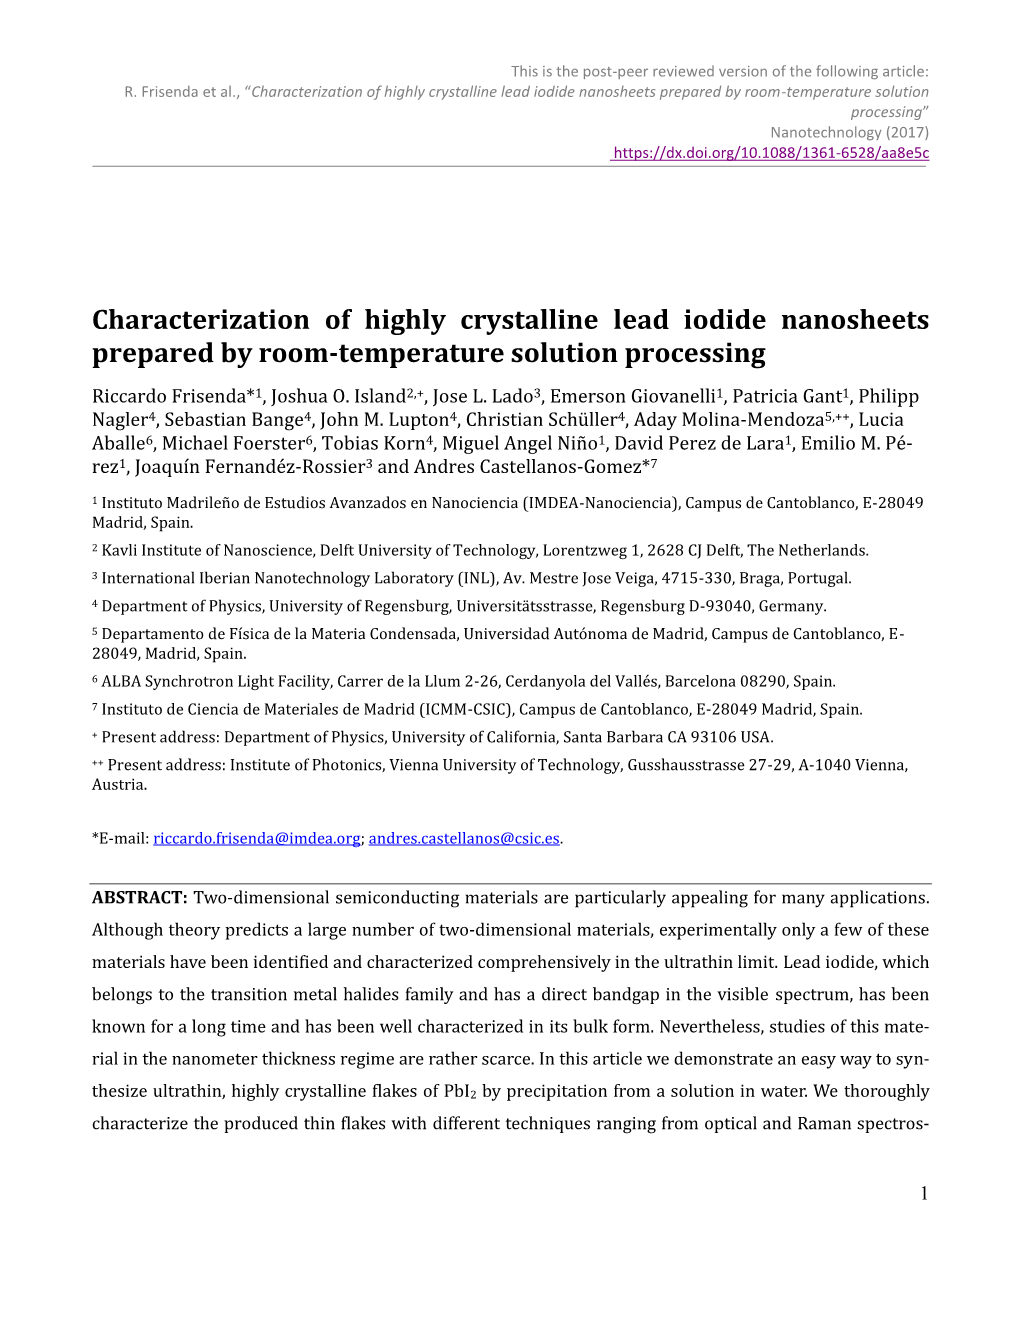 Characterization of Highly Crystalline Lead Iodide Nanosheets Prepared